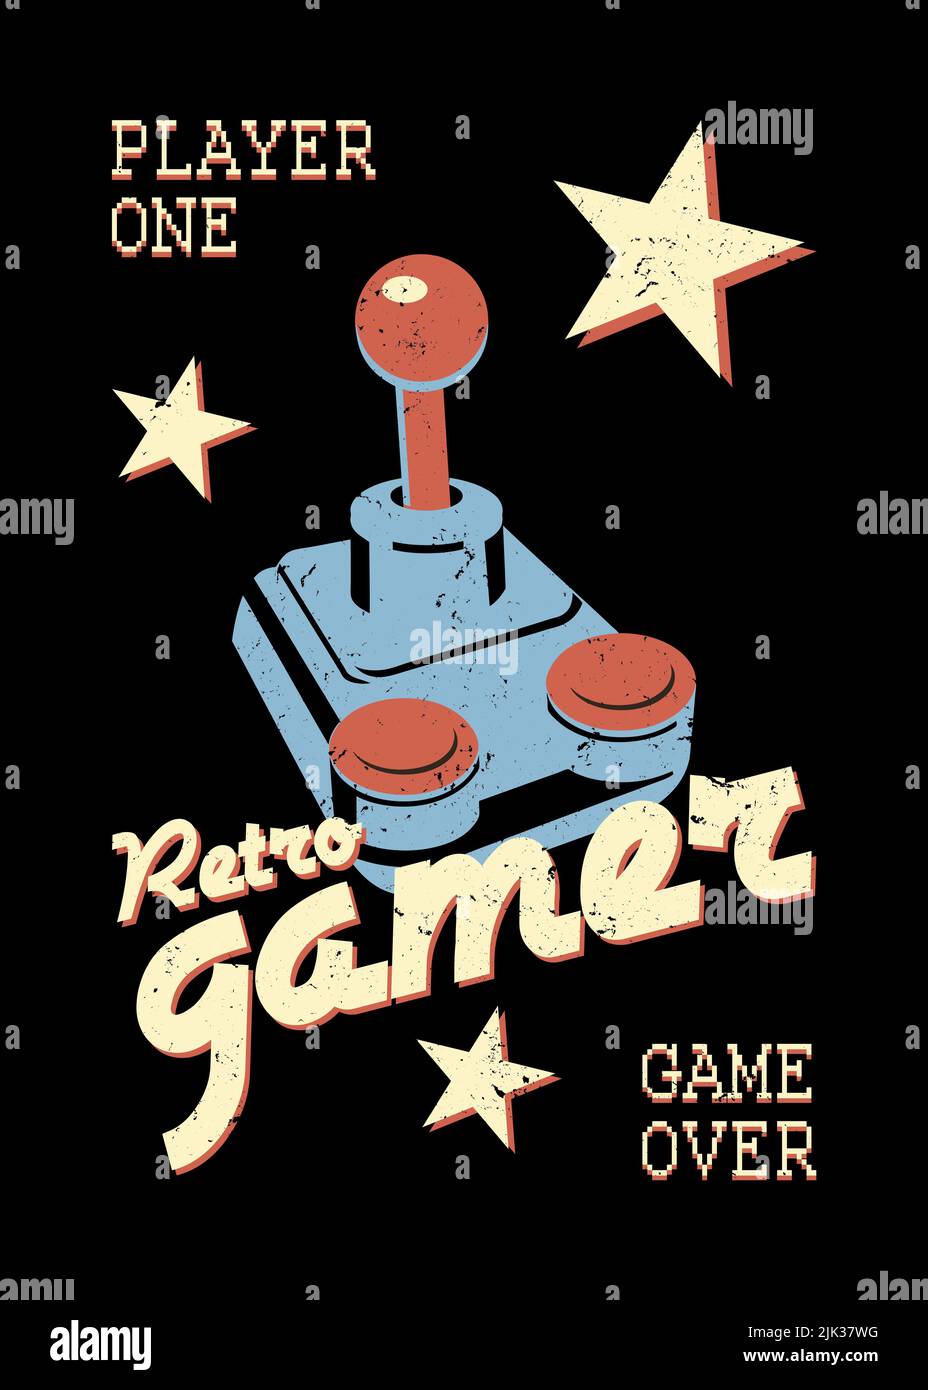 Retro Gamer - Distressed Gaming Graphic Stock Photo